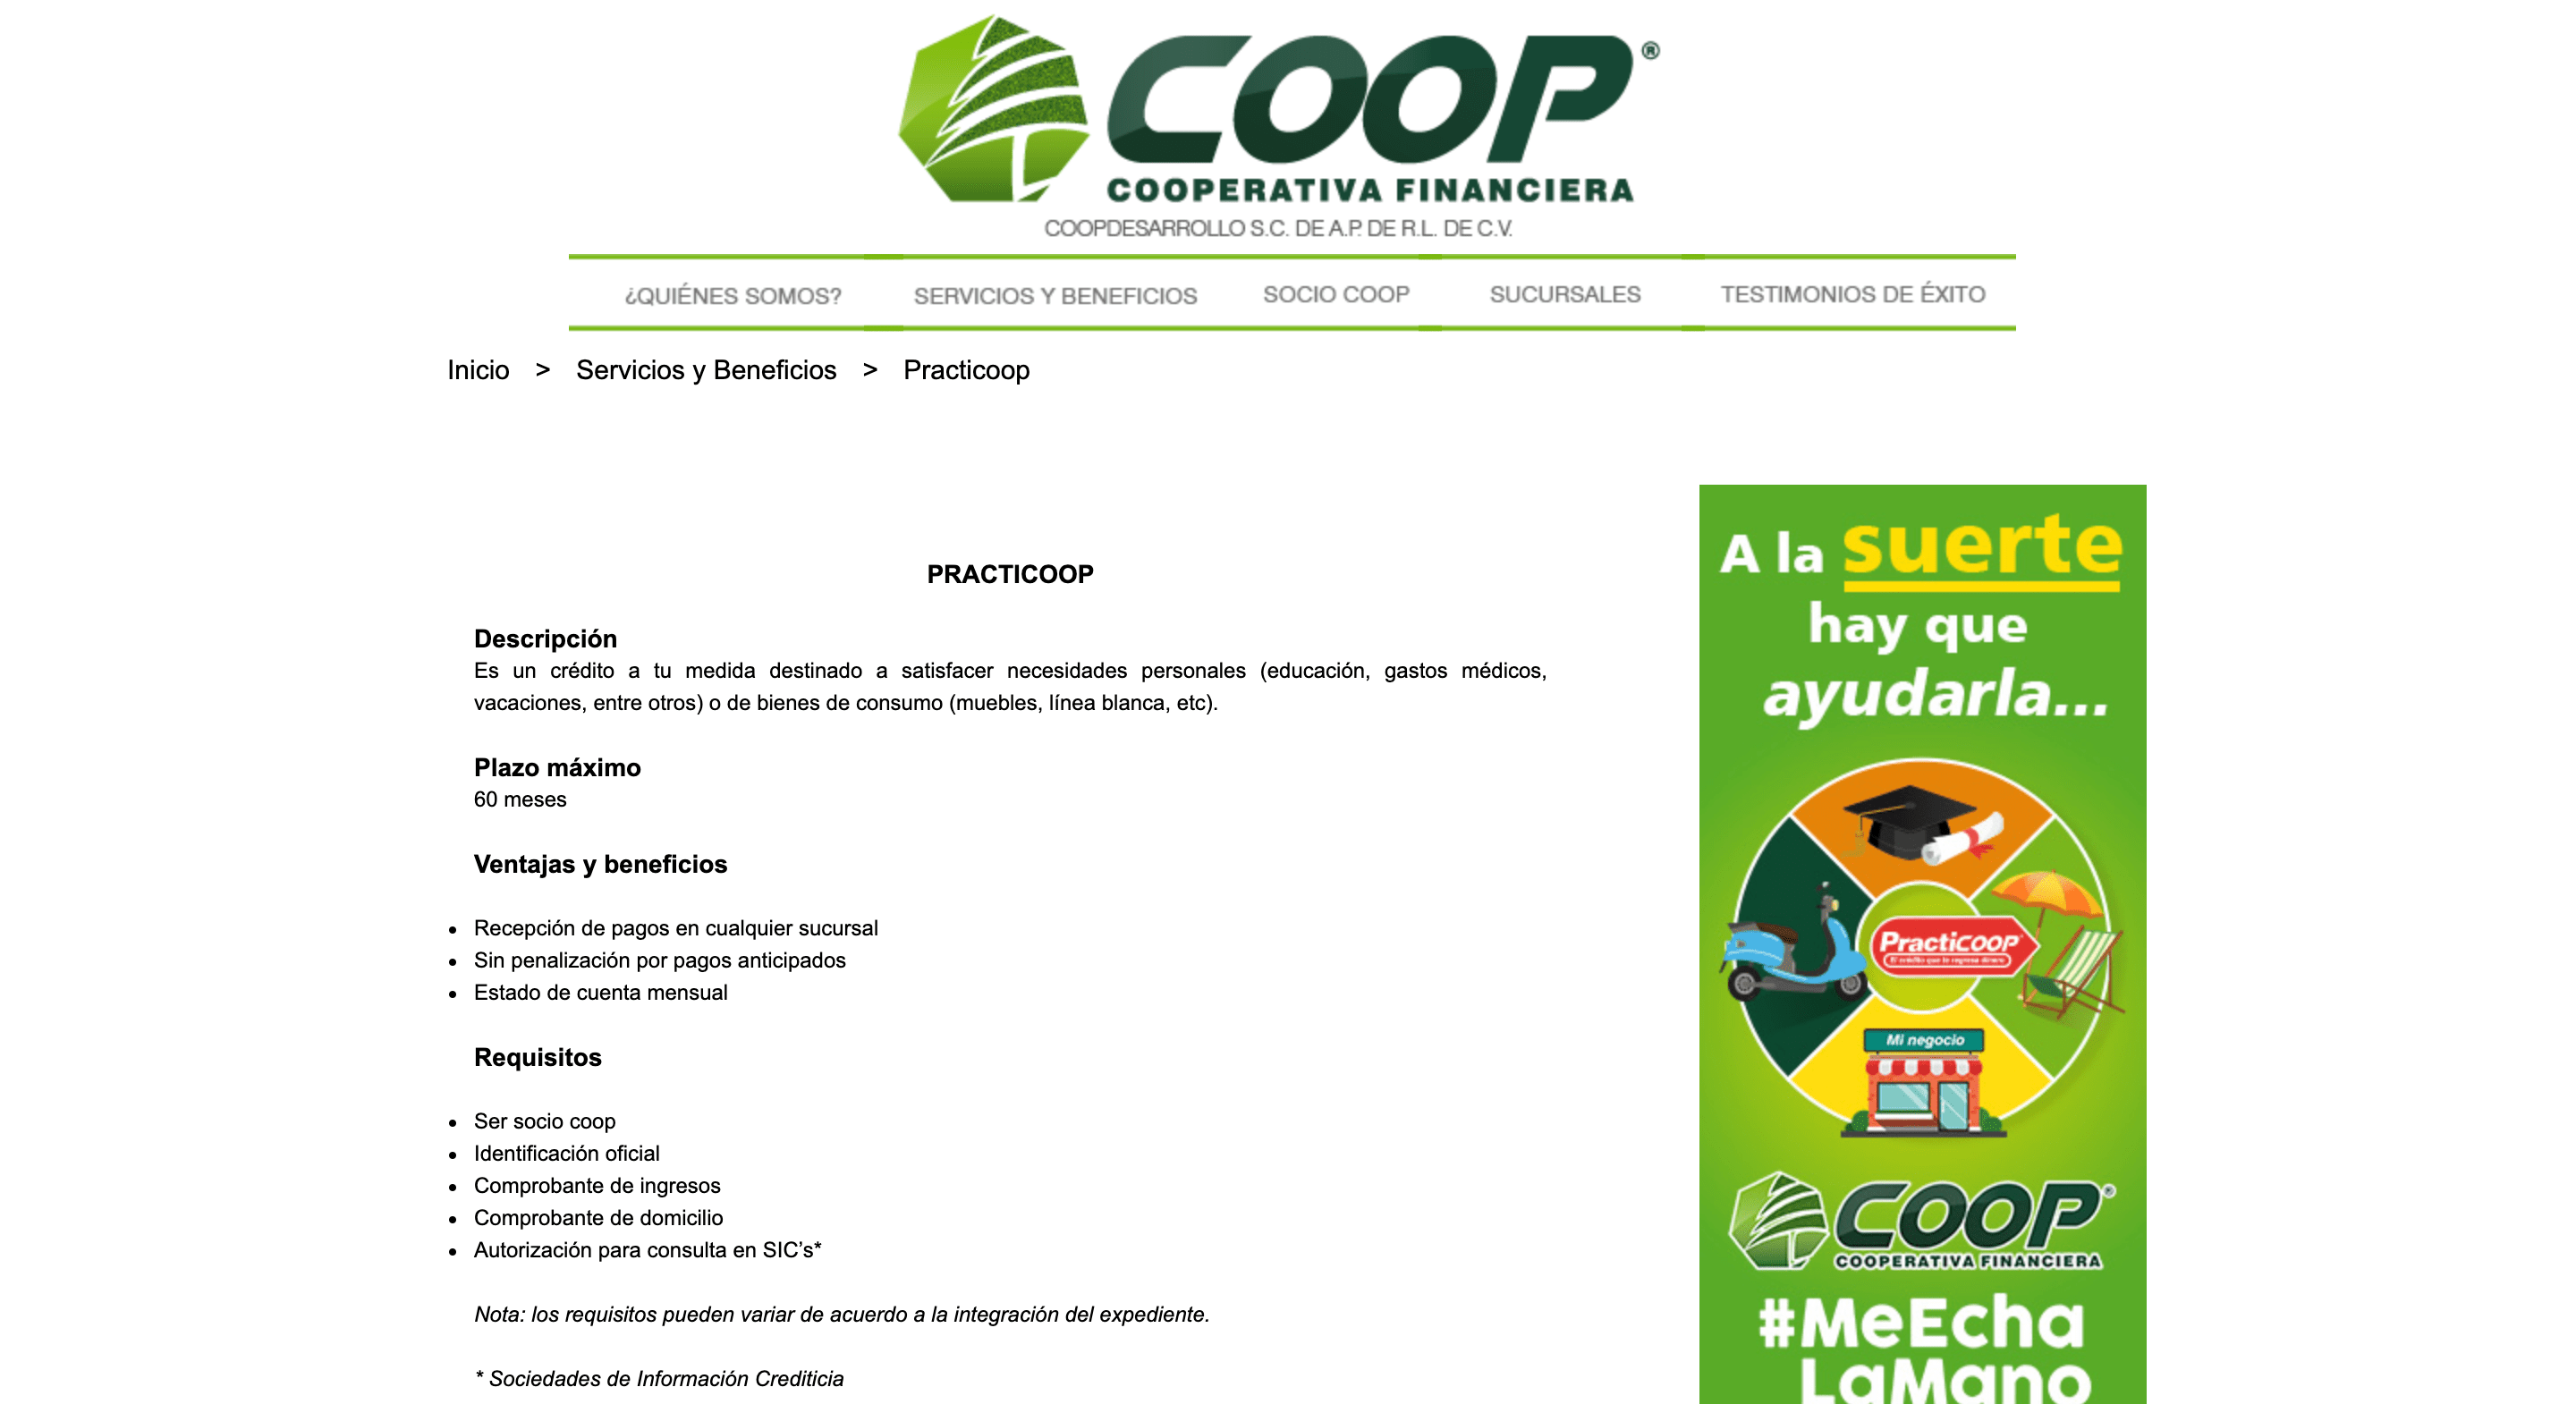 Coop Cooperativa Financiera